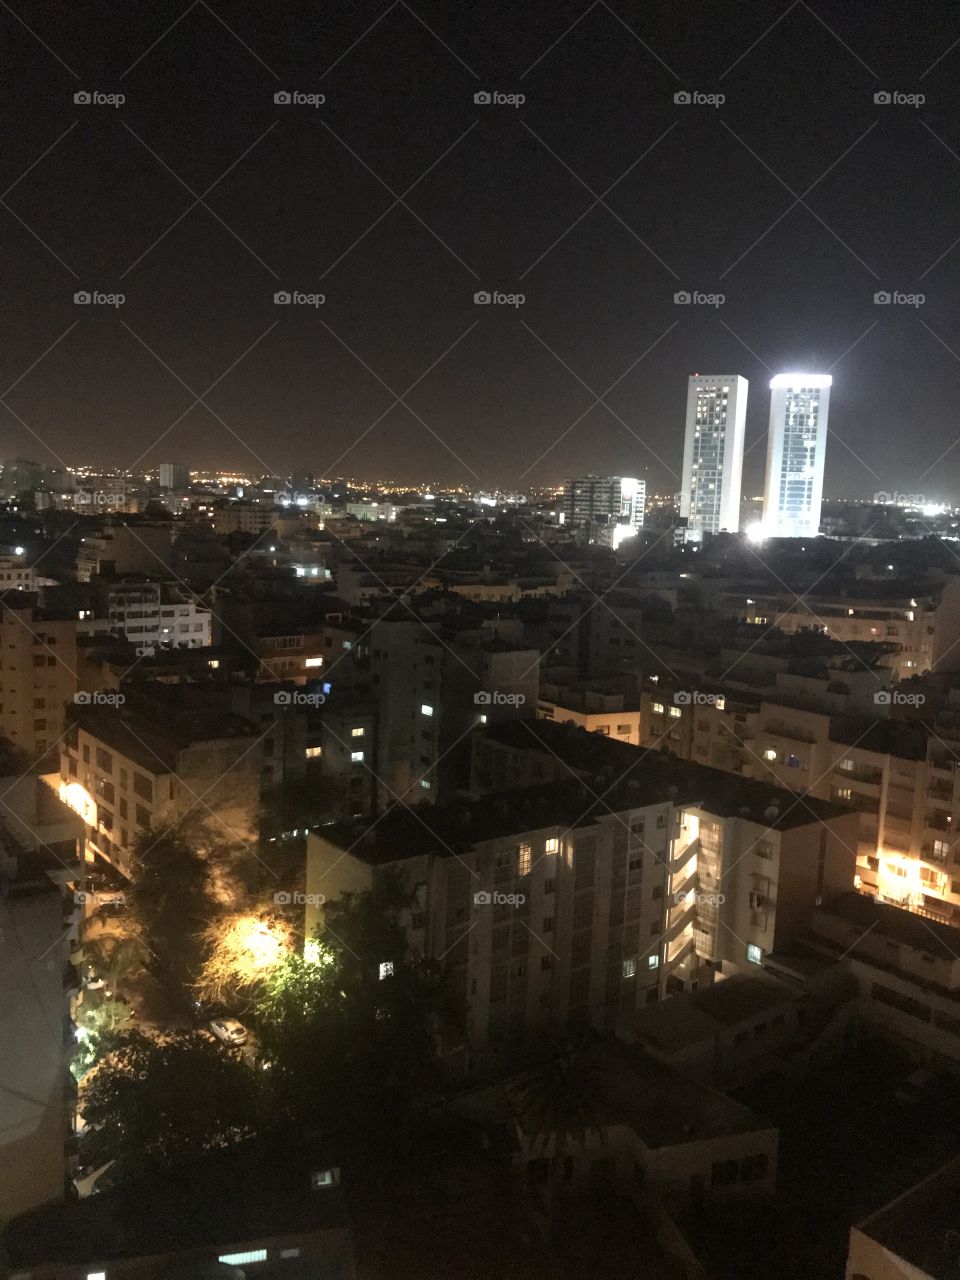 Casablanca in the night